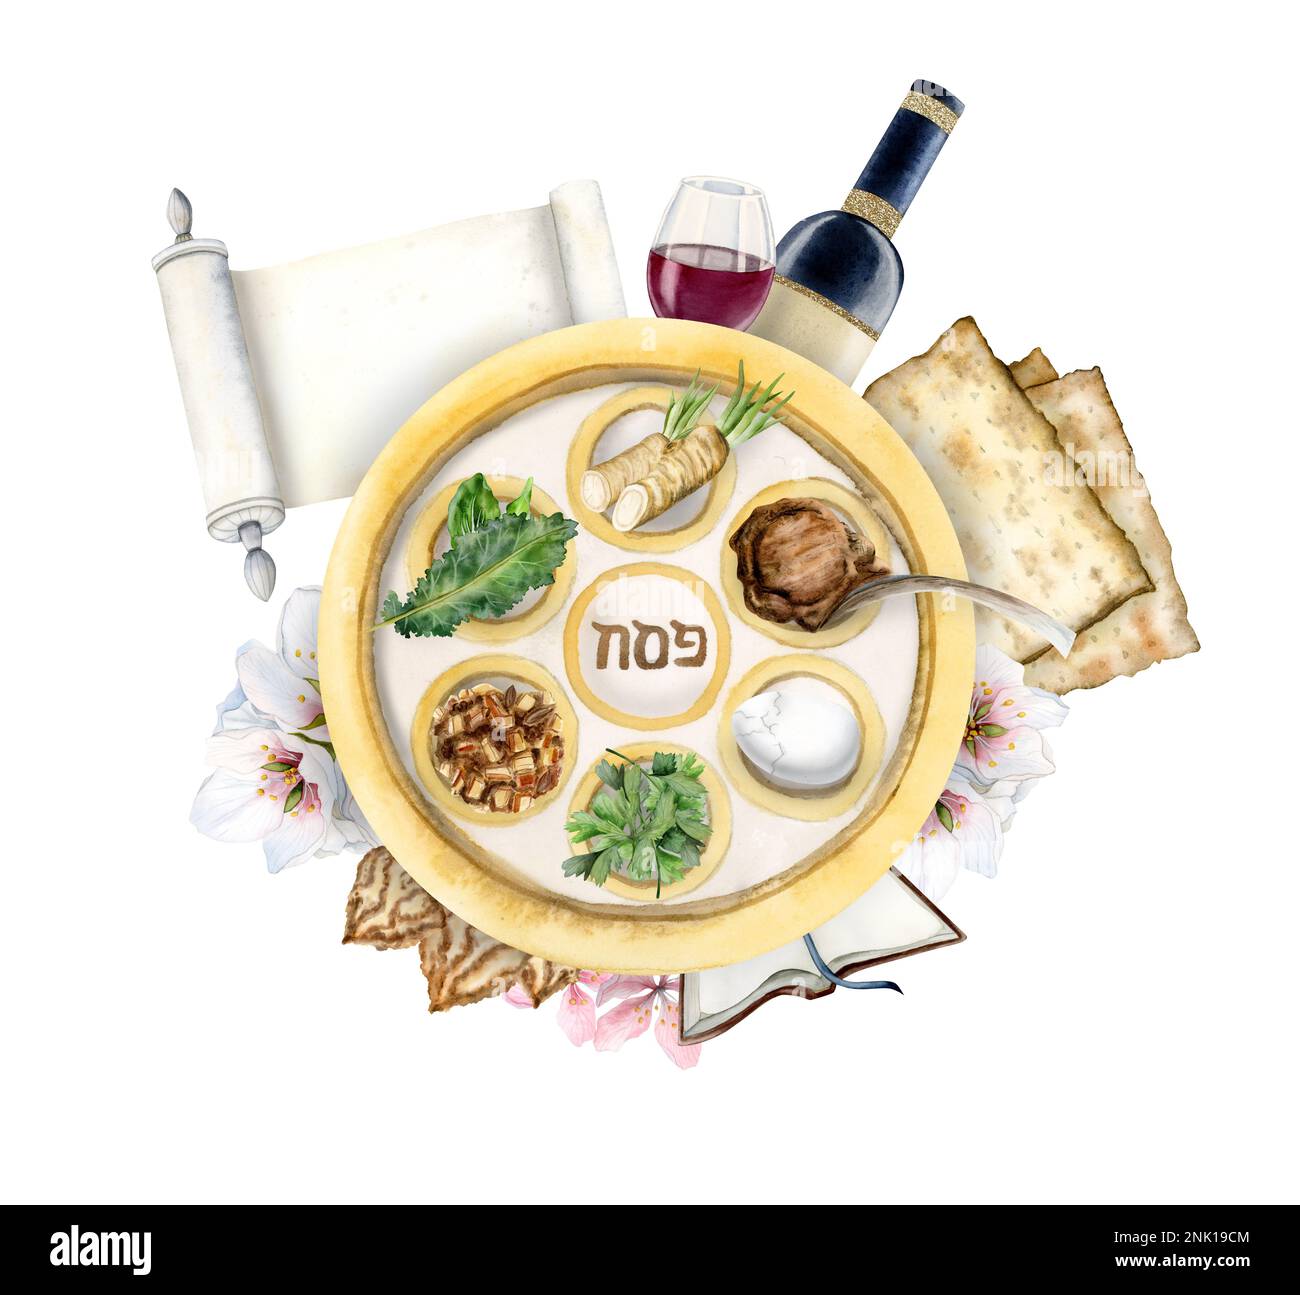 Watercolor Passover symbols - seder plate with holiday food, wine, Haggadah scroll, matzah, horseradish, lamb leg bone, herbs Stock Photo